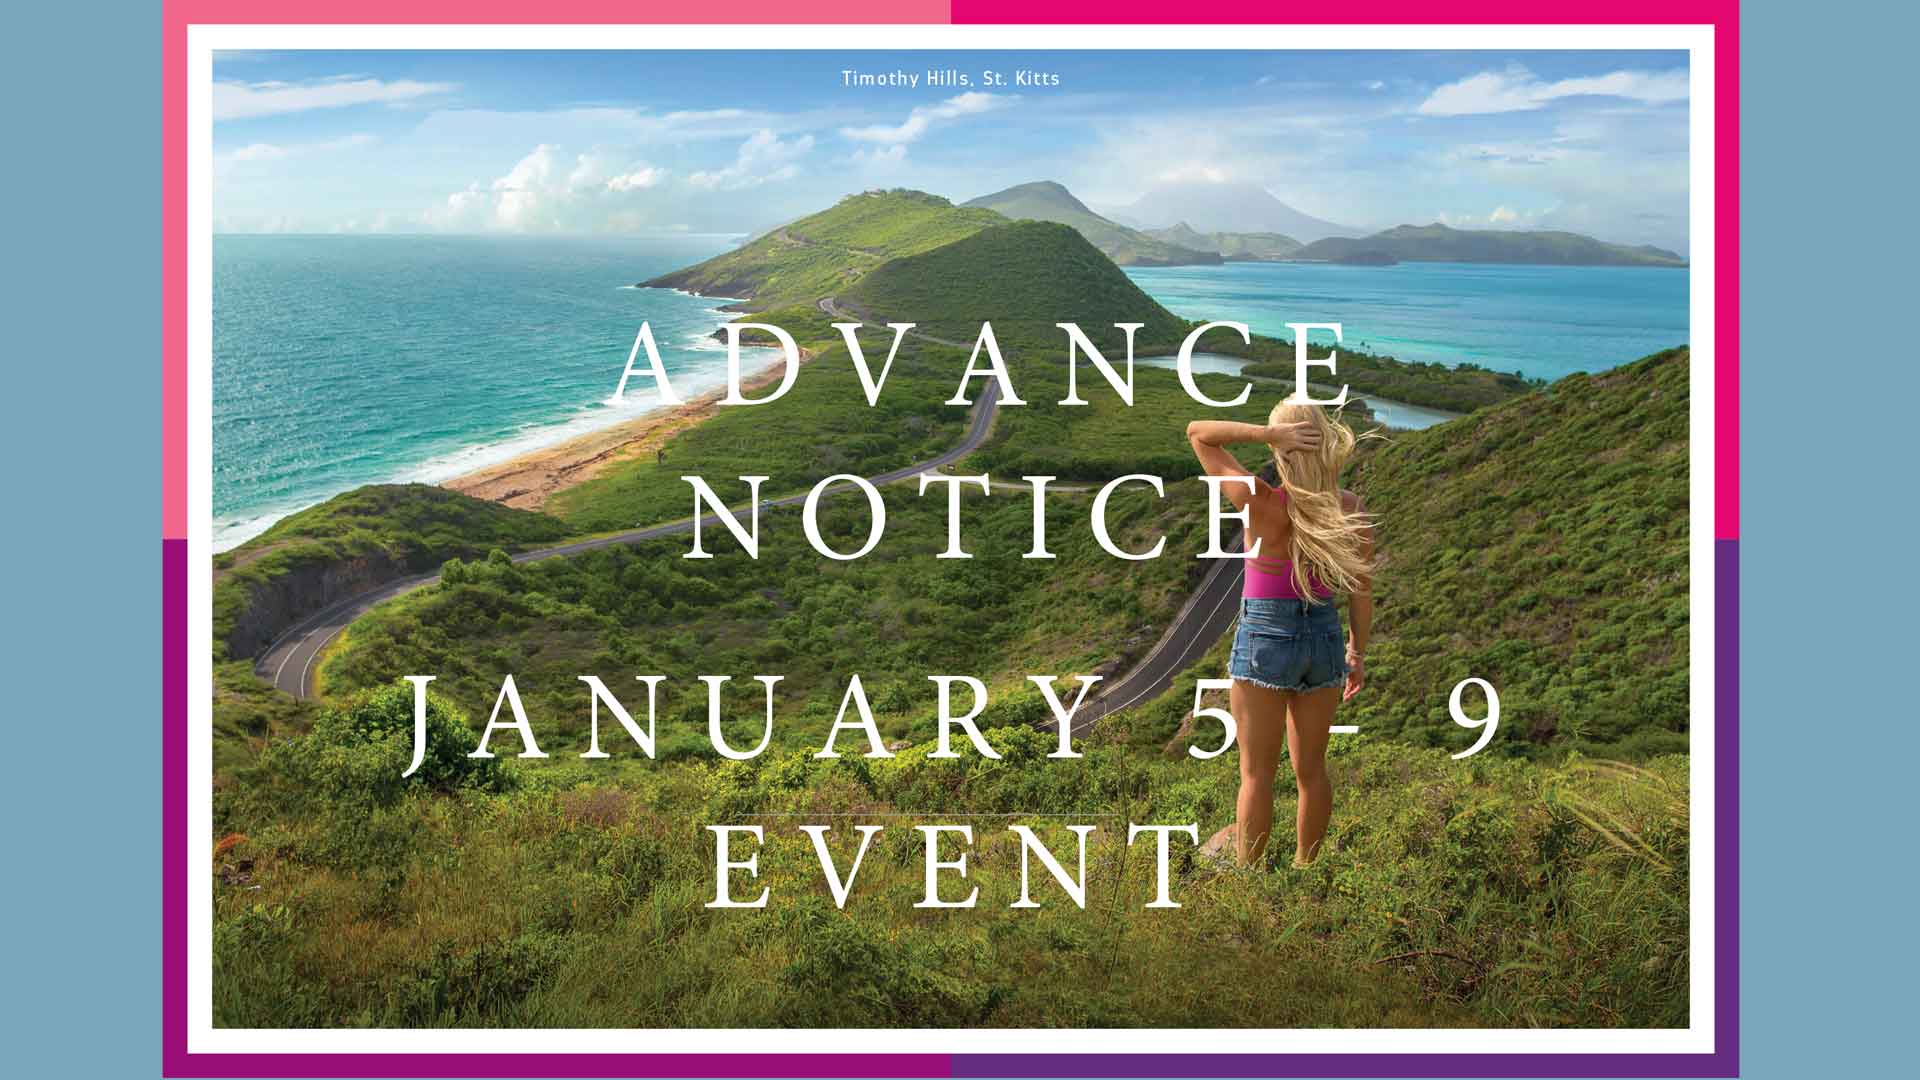 Royal Caribbean International January 5-9 sale